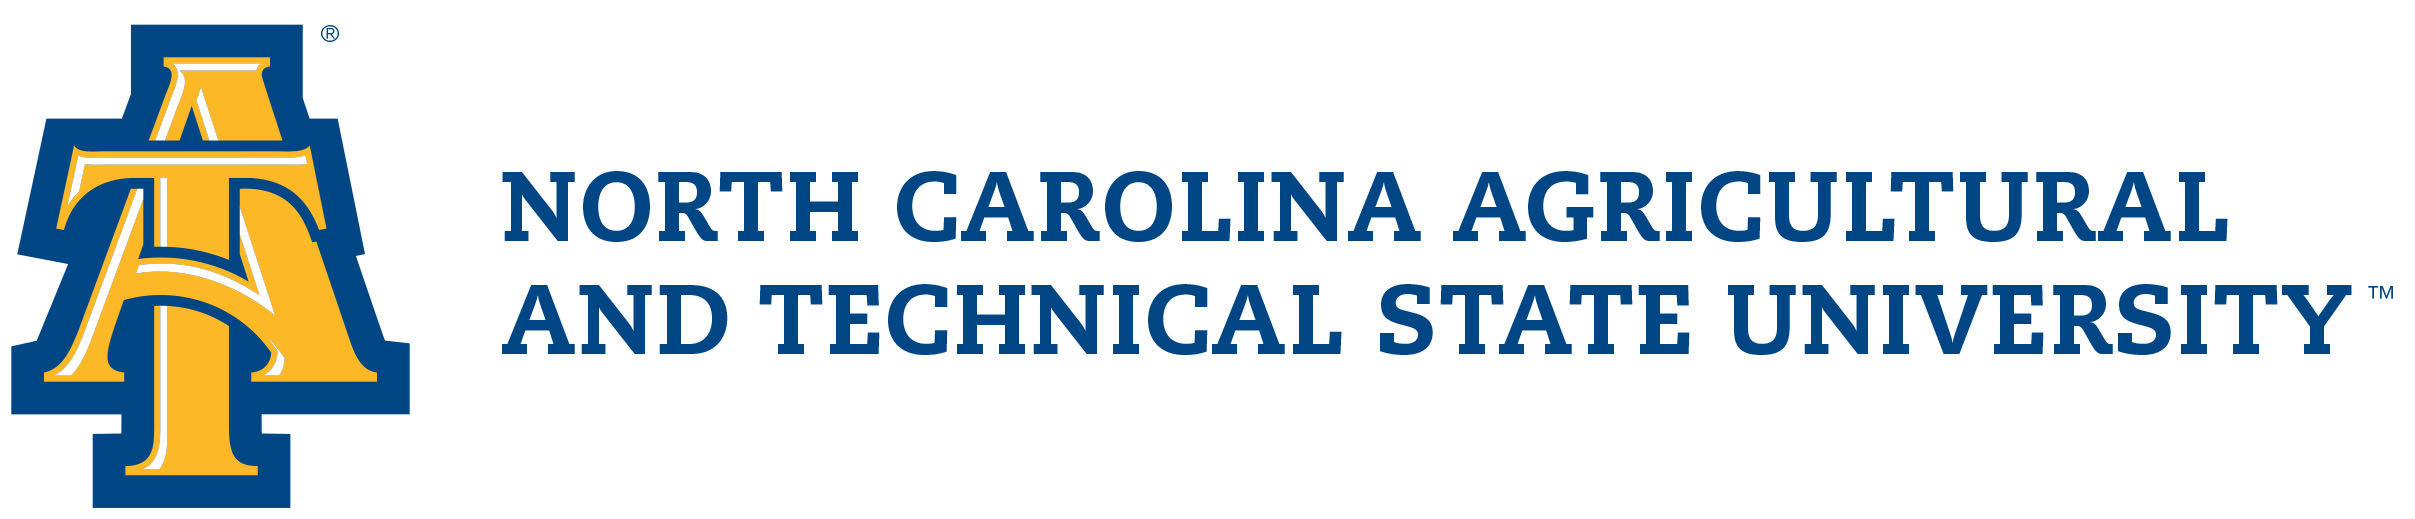 North Carolina A&T State University post order